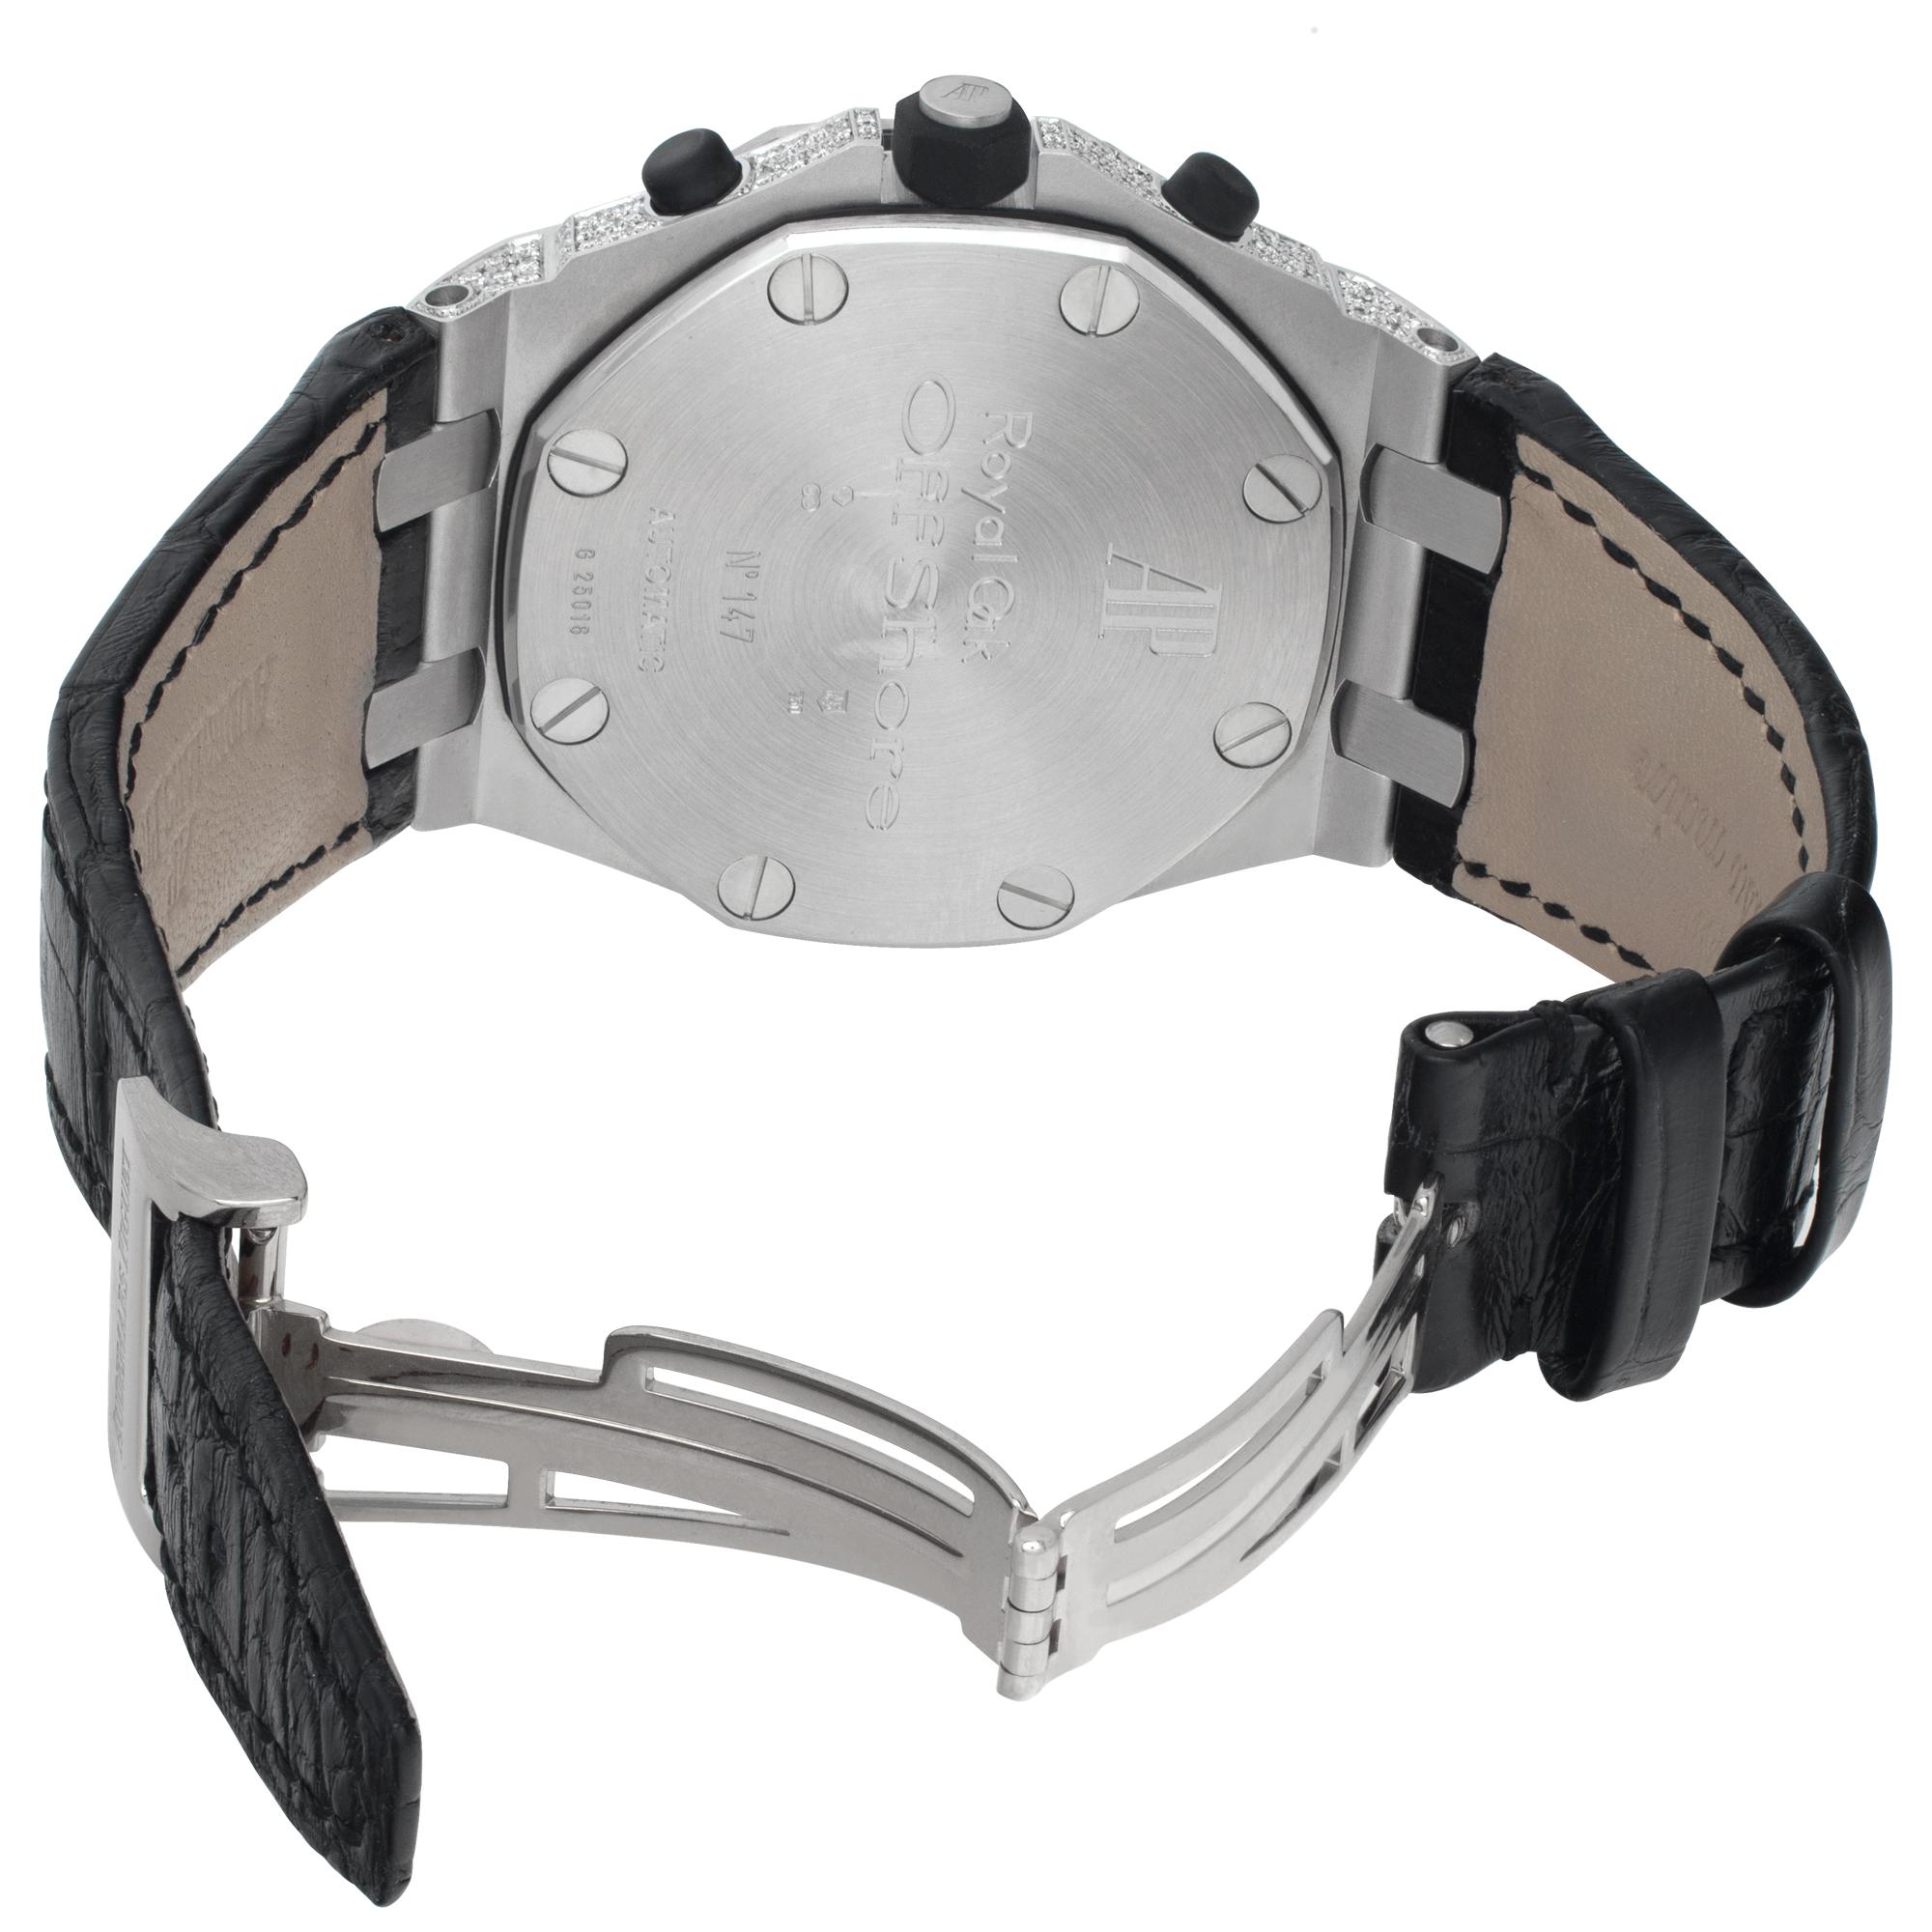 Audemars Piguet Royal Oak Offsho dial 42 mm watch In Excellent Condition For Sale In Surfside, FL